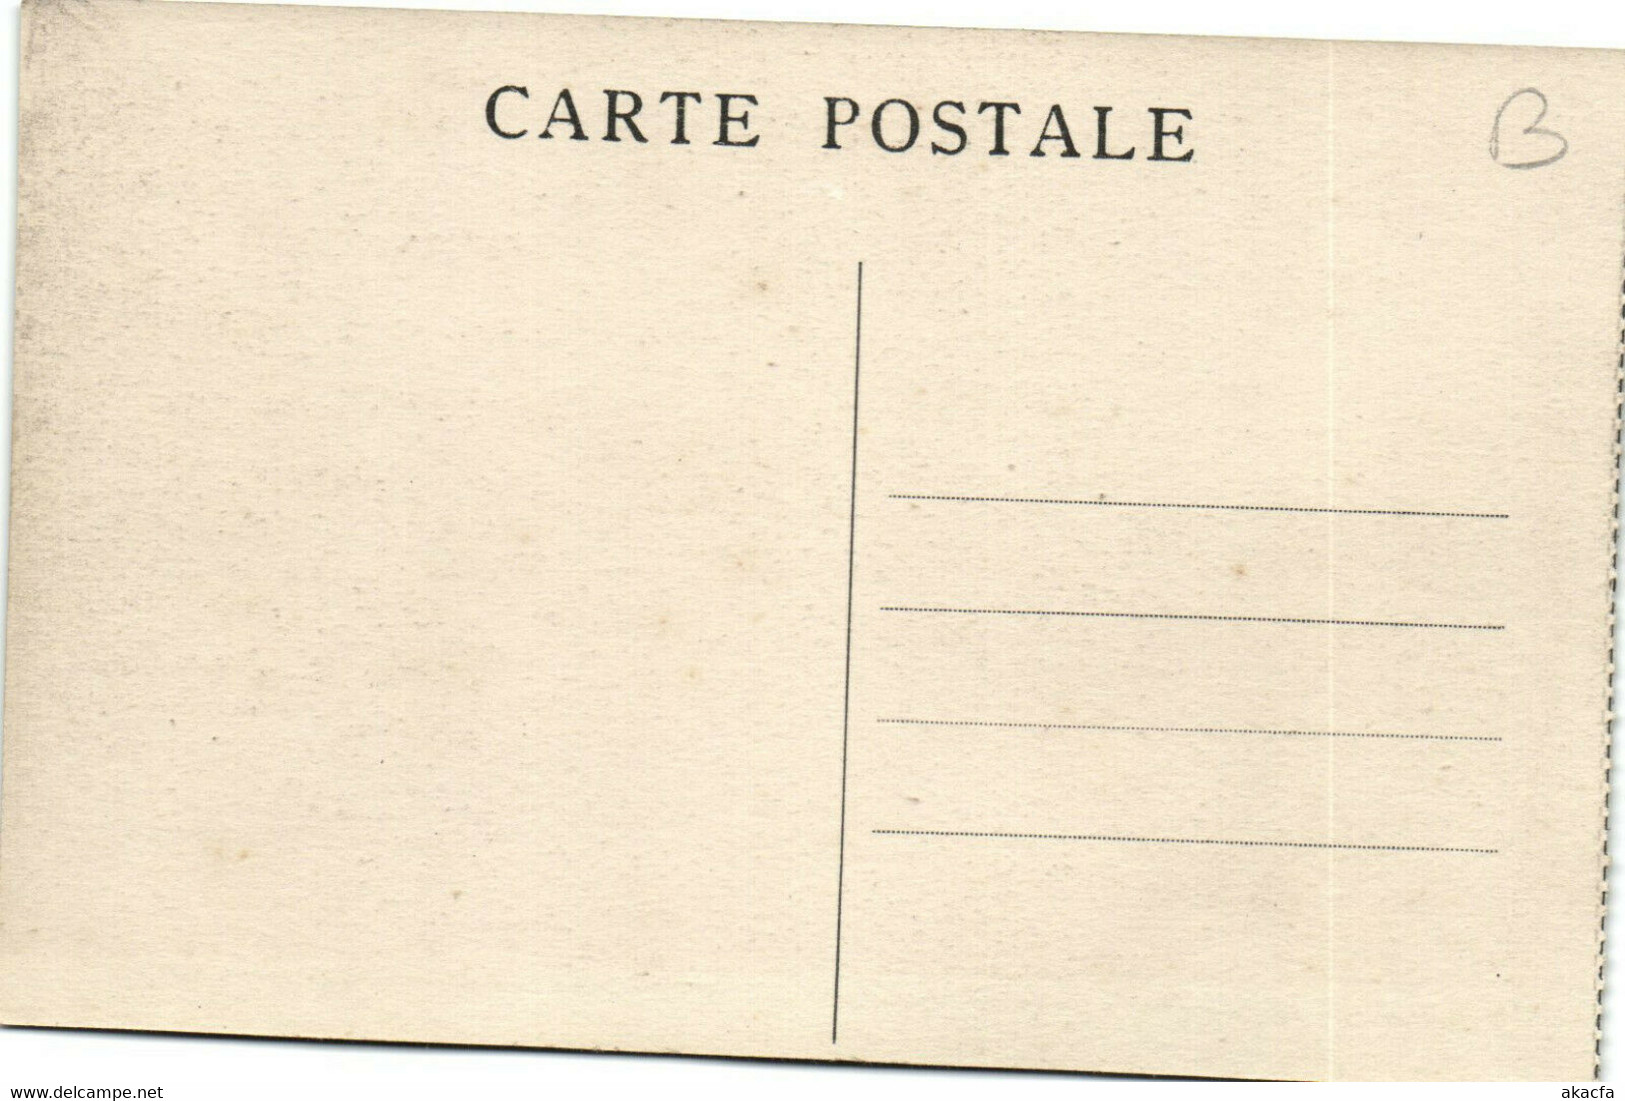 PC UK, SALOMON ISLANDS, MALÉAI, LE PLUS BEAU, Vintage Postcard (b33522) - Islas Salomon